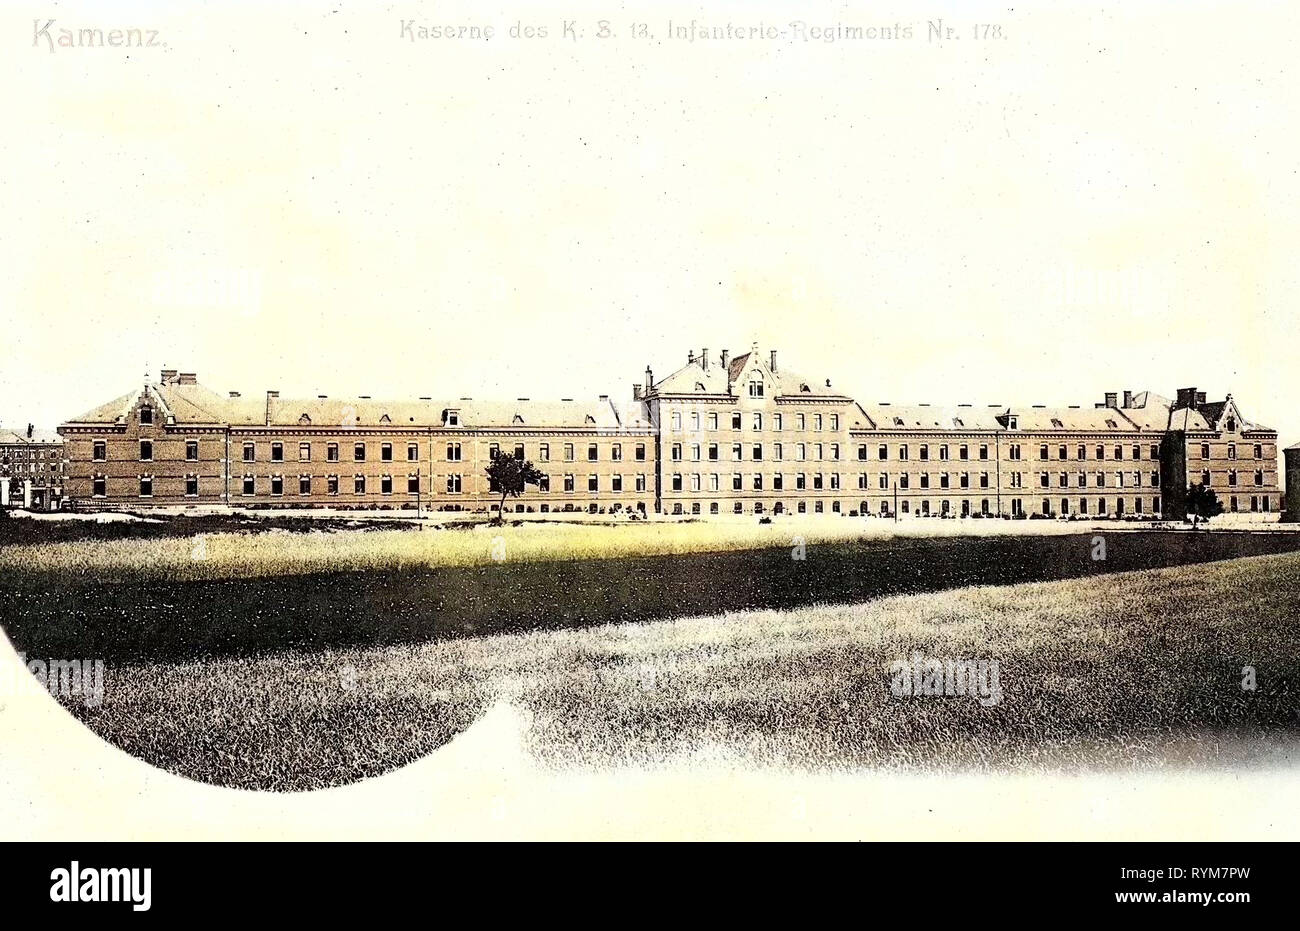 Kaserne Kamenz M55, 1903, Landkreis Bautzen, de Kamenz, Kaserne des 12. Königlich Sächsischen Infanterie, Régiments Nr. 178, Allemagne Banque D'Images